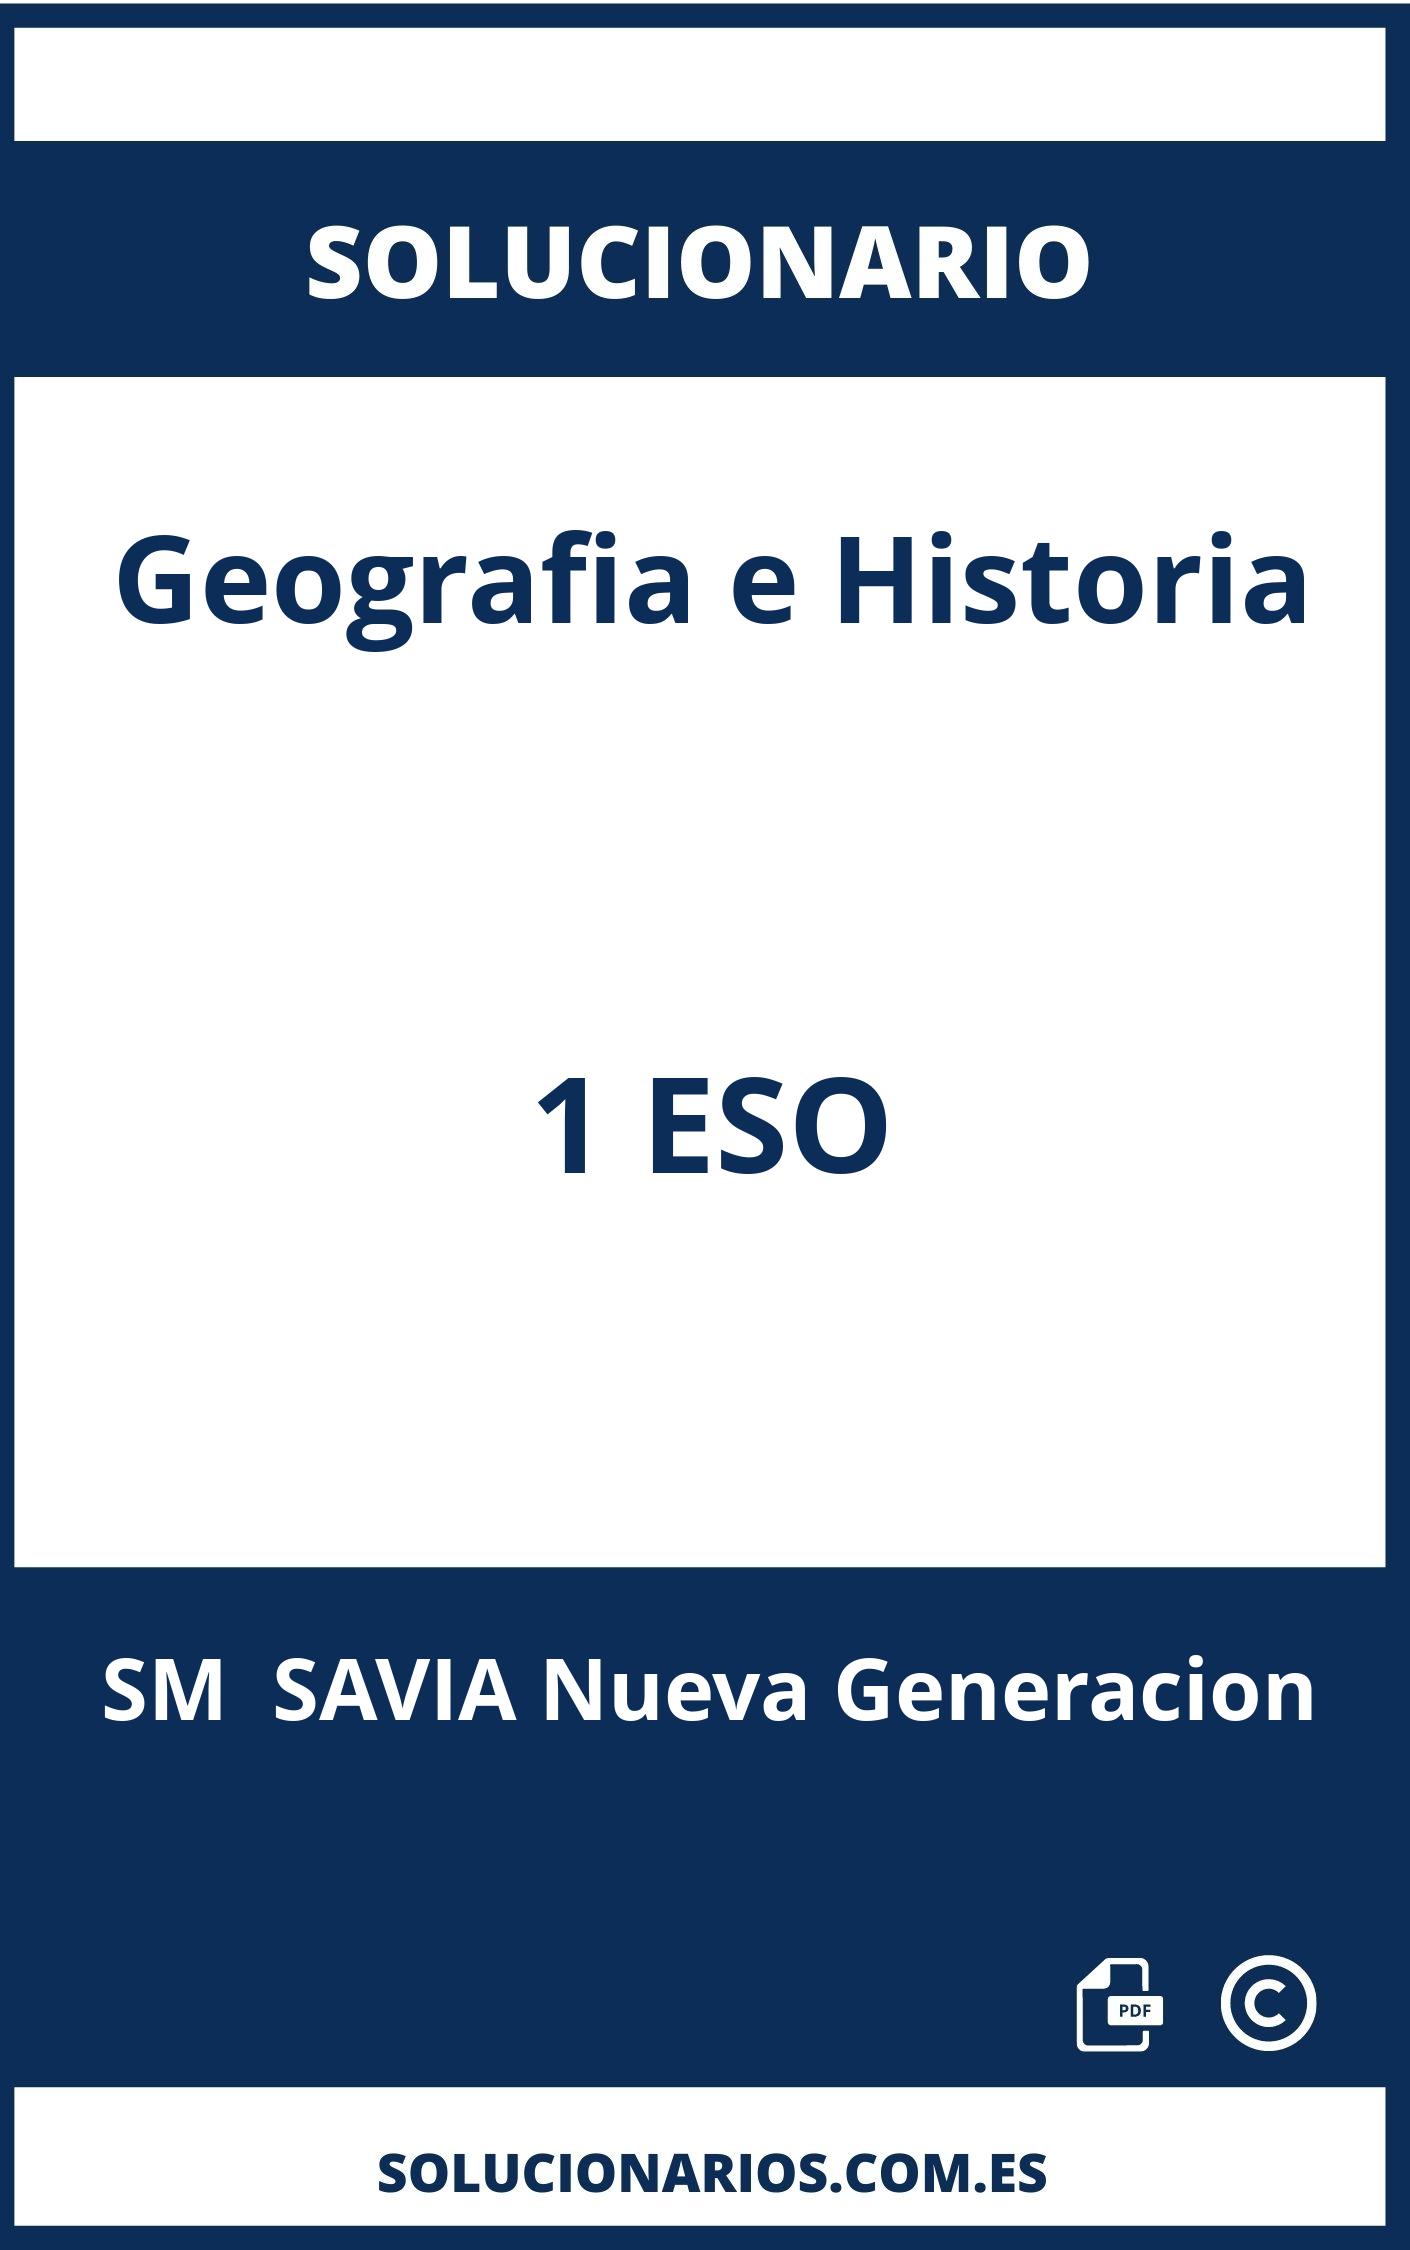 Solucionario Geografia e Historia 1 ESO SM  SAVIA Nueva Generacion